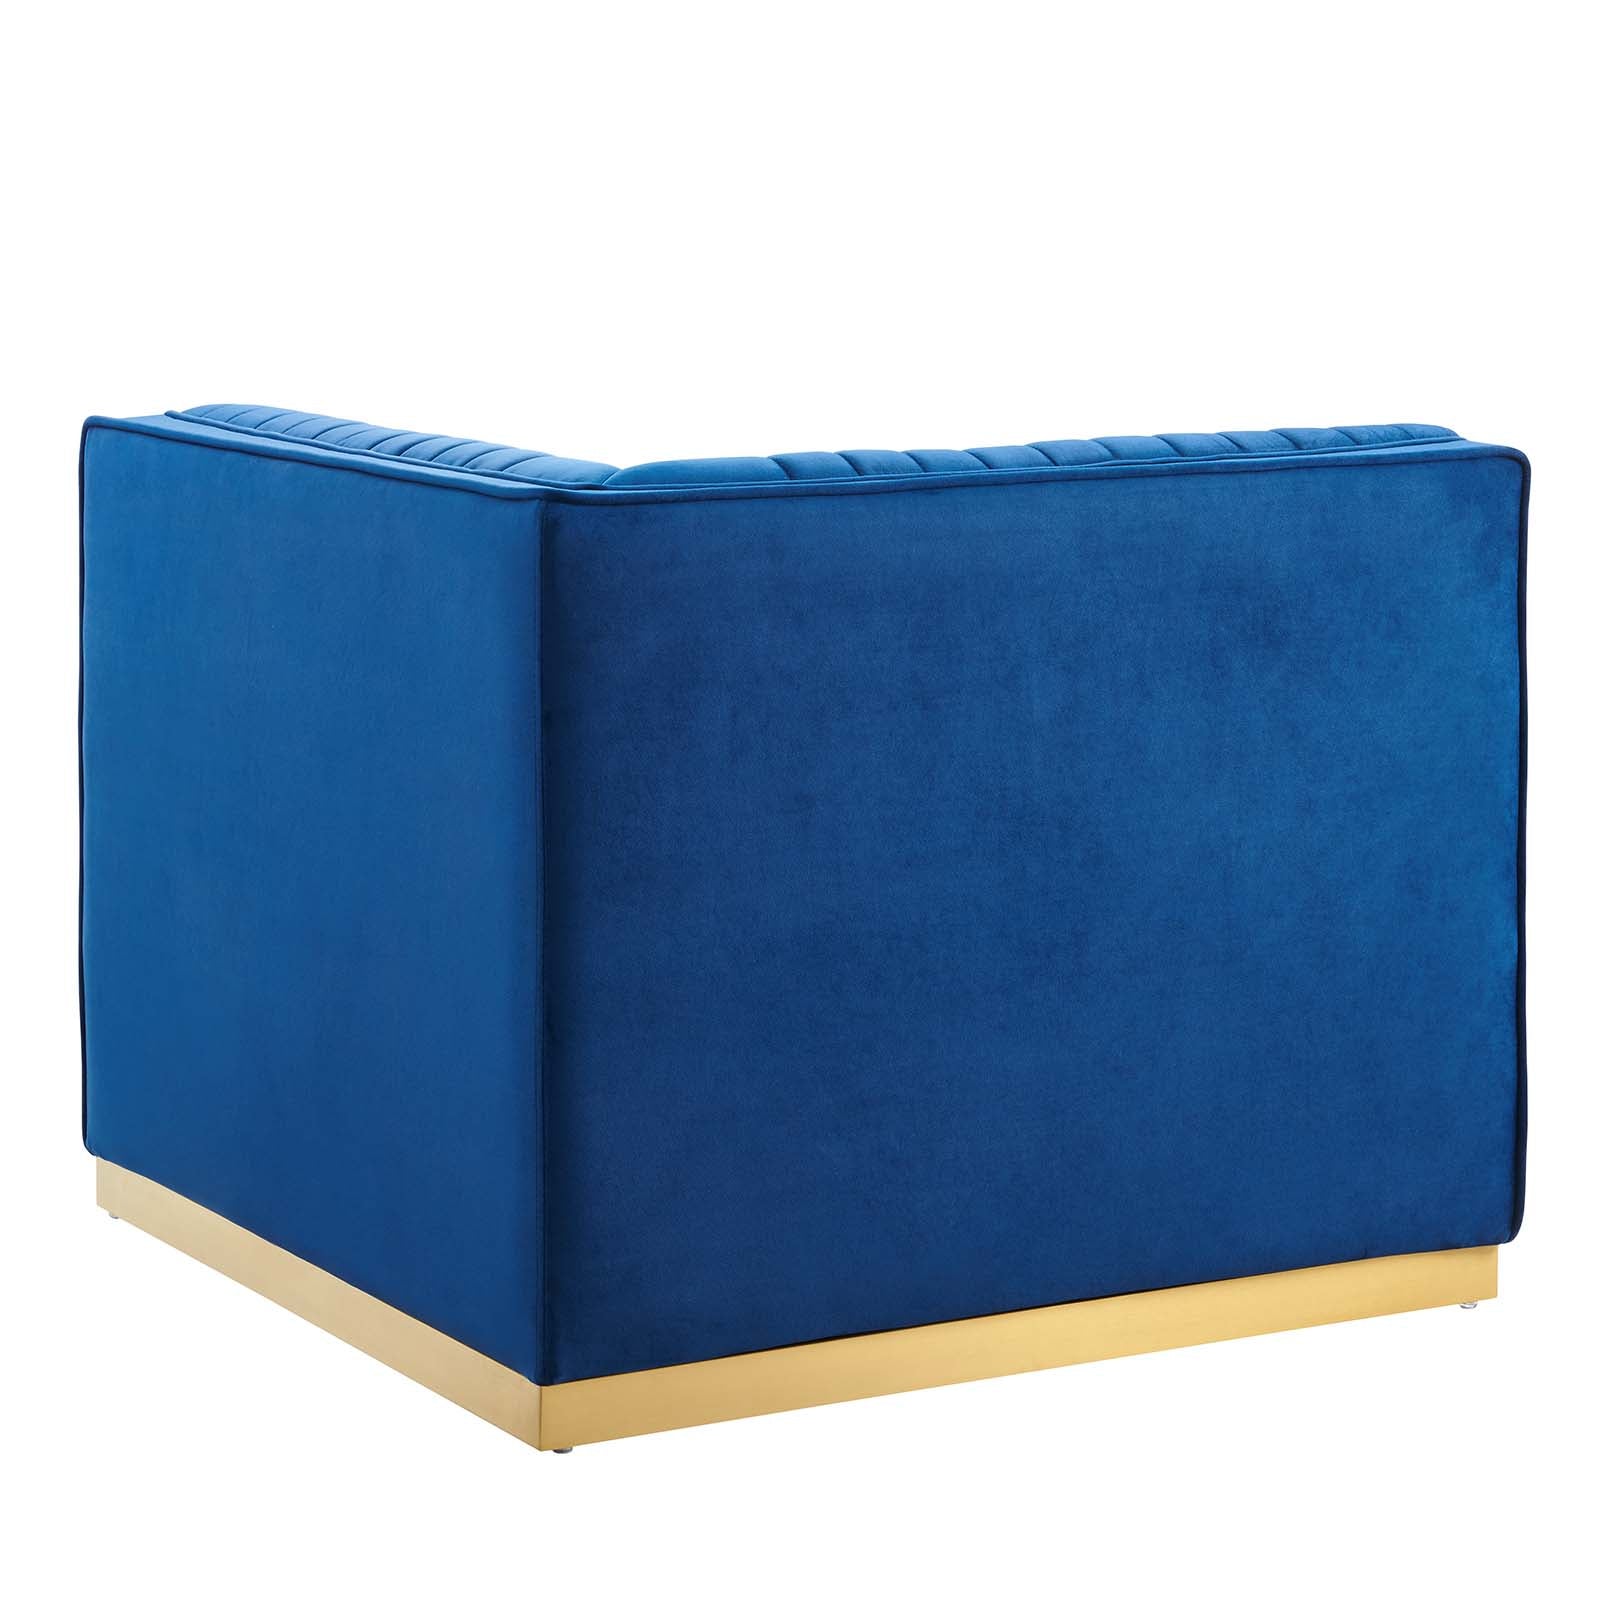 Sanguine Channel Tufted Performance Velvet Modular Sectional Sofa Left Corner Chair-Corner Chair-Modway-Wall2Wall Furnishings